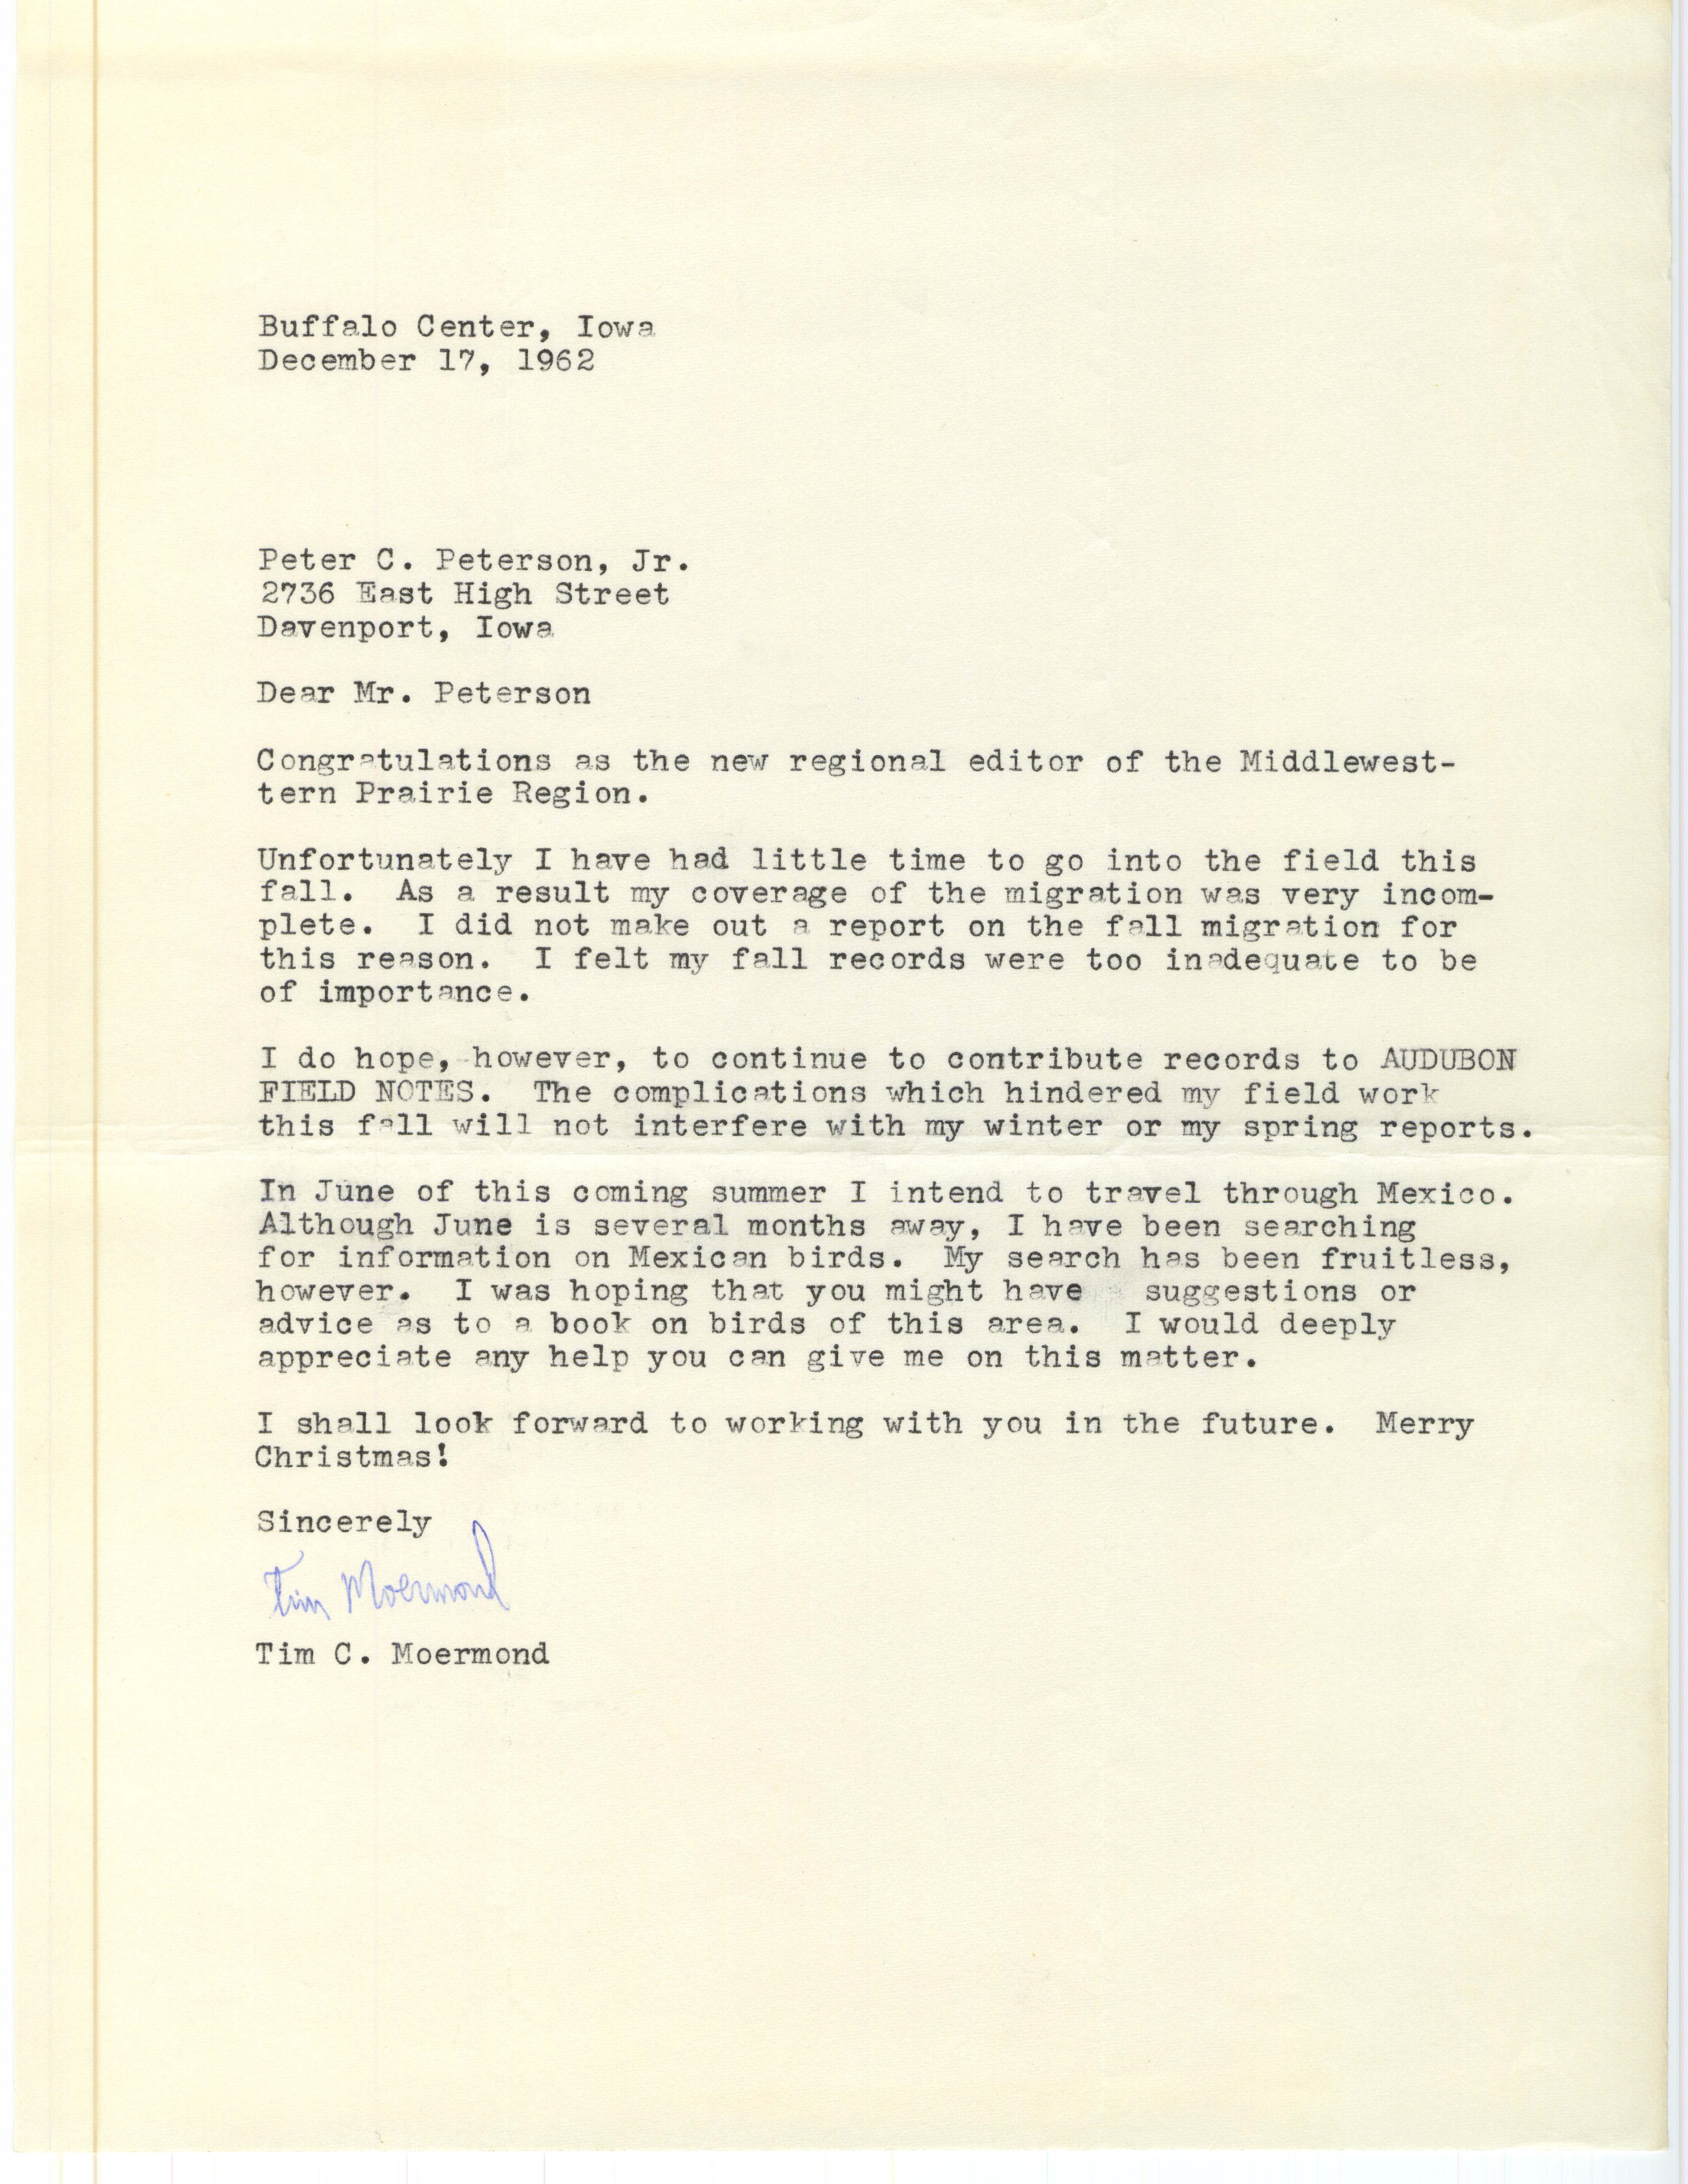 Tim C. Moermond letter to Peter C. Petersen regarding field notes, fall 1962